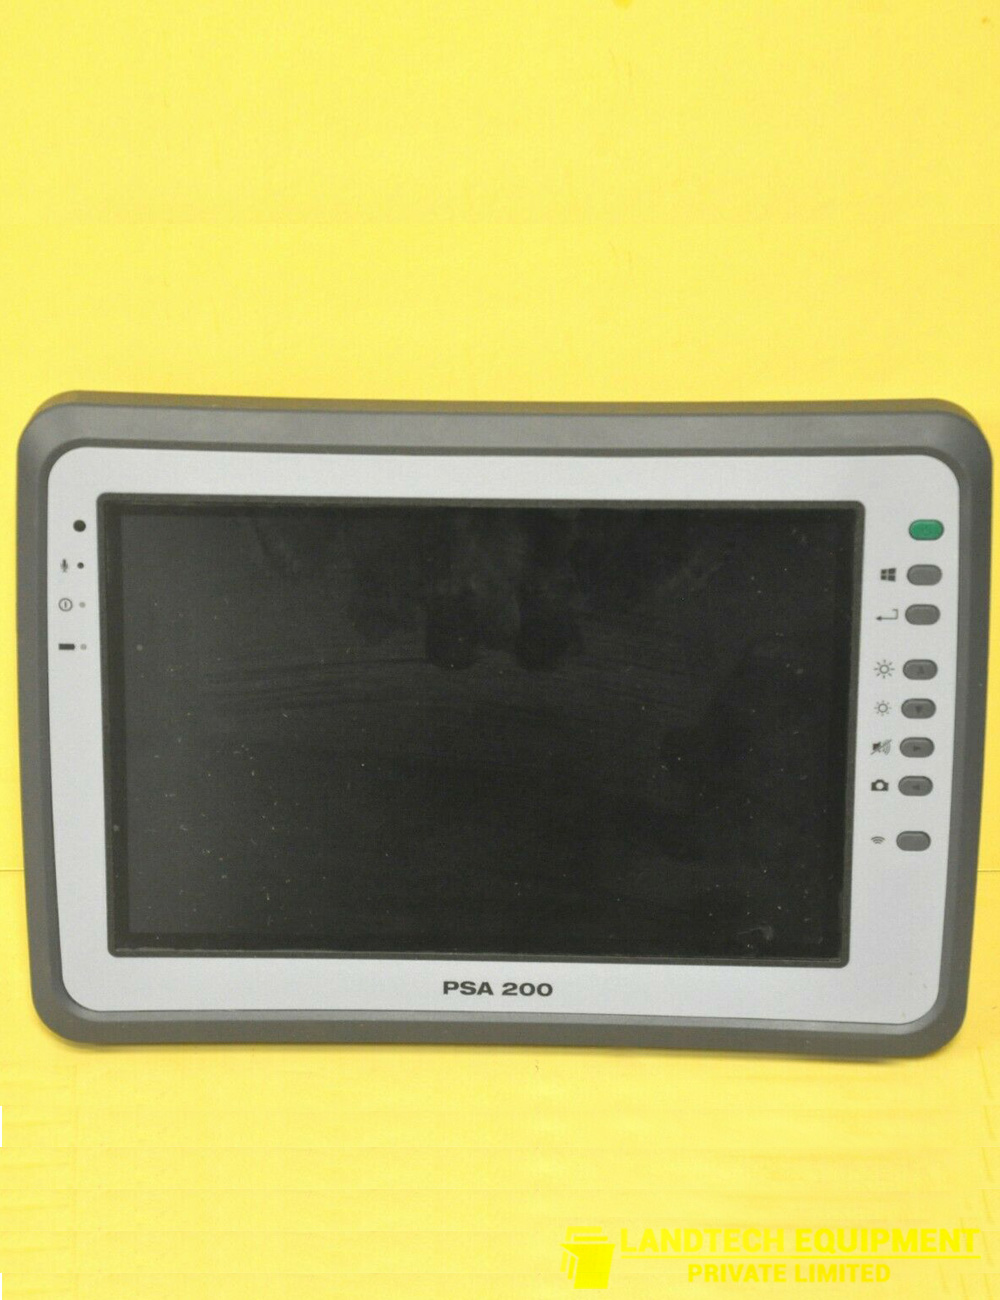 Hilti-PS-1000-X-Scan-PSA-200.jpg